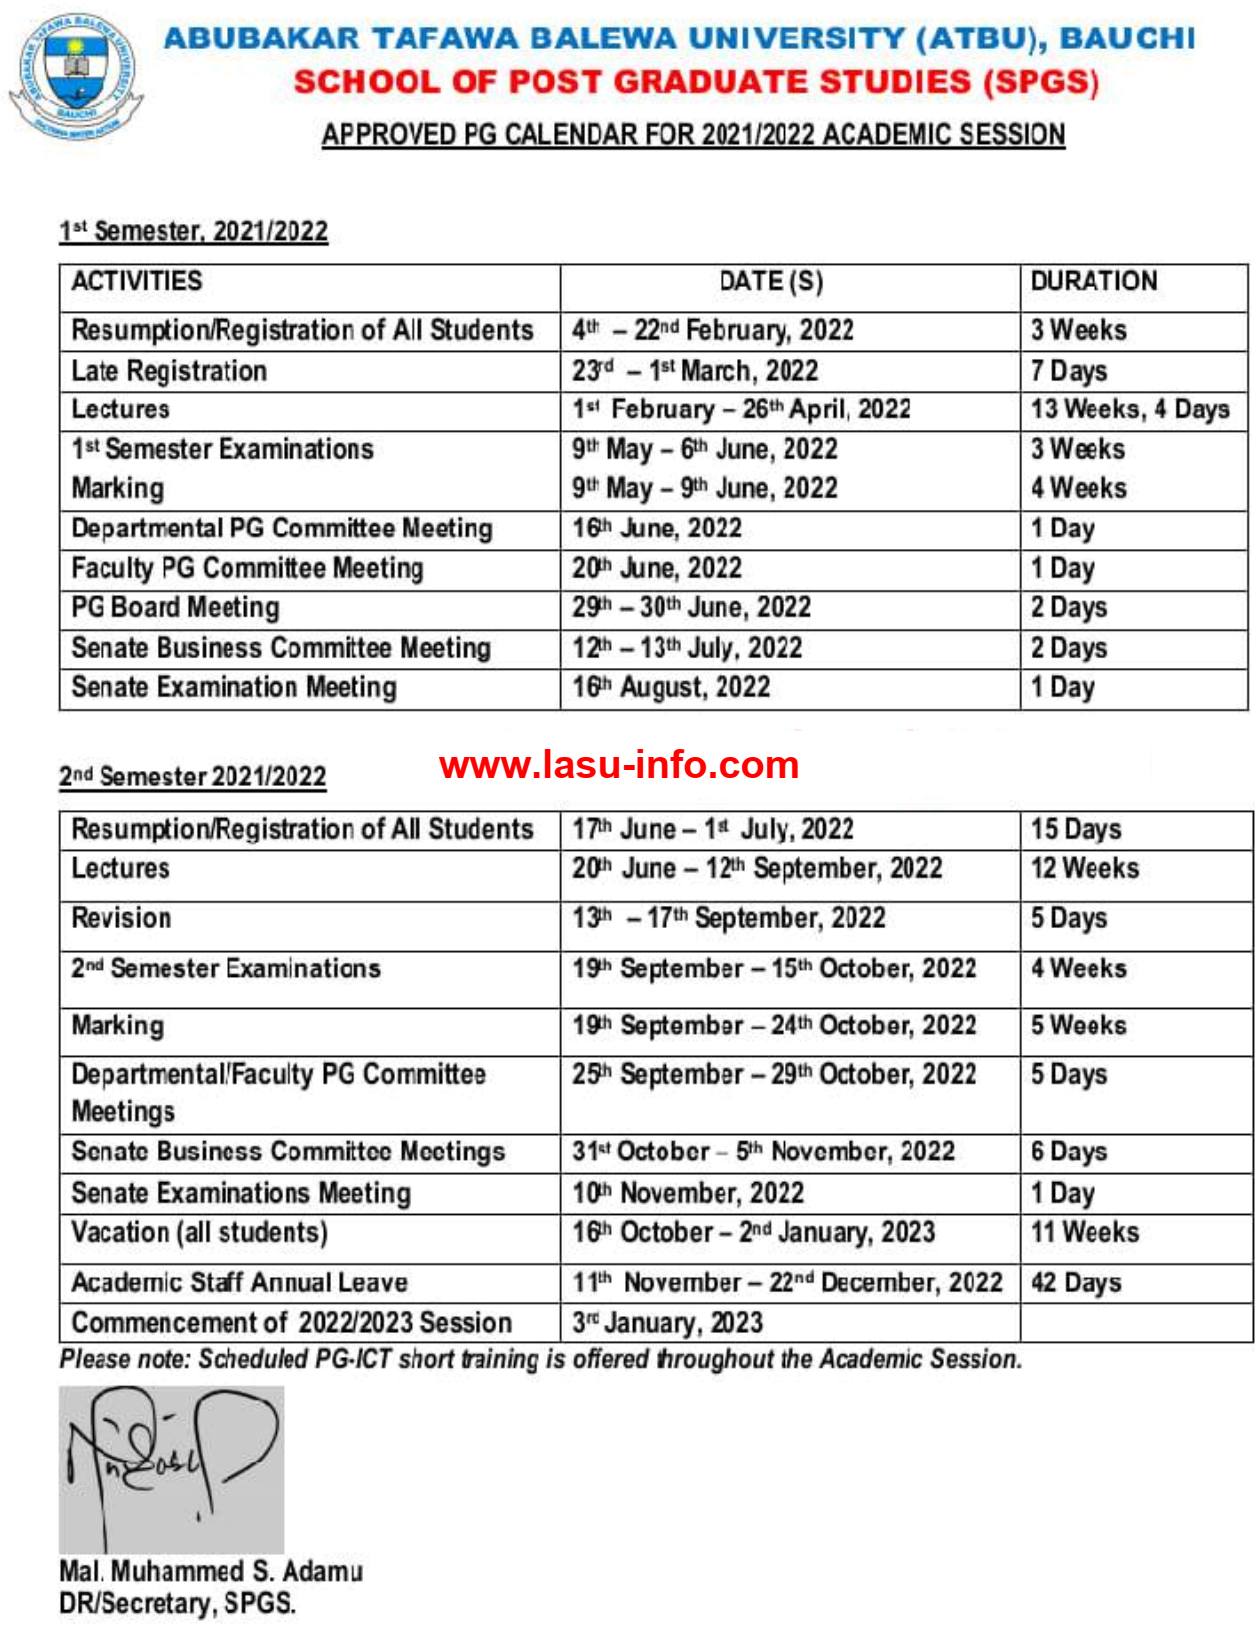 ATBU Postgraduate Academic Calendar Schedule 2021/2022